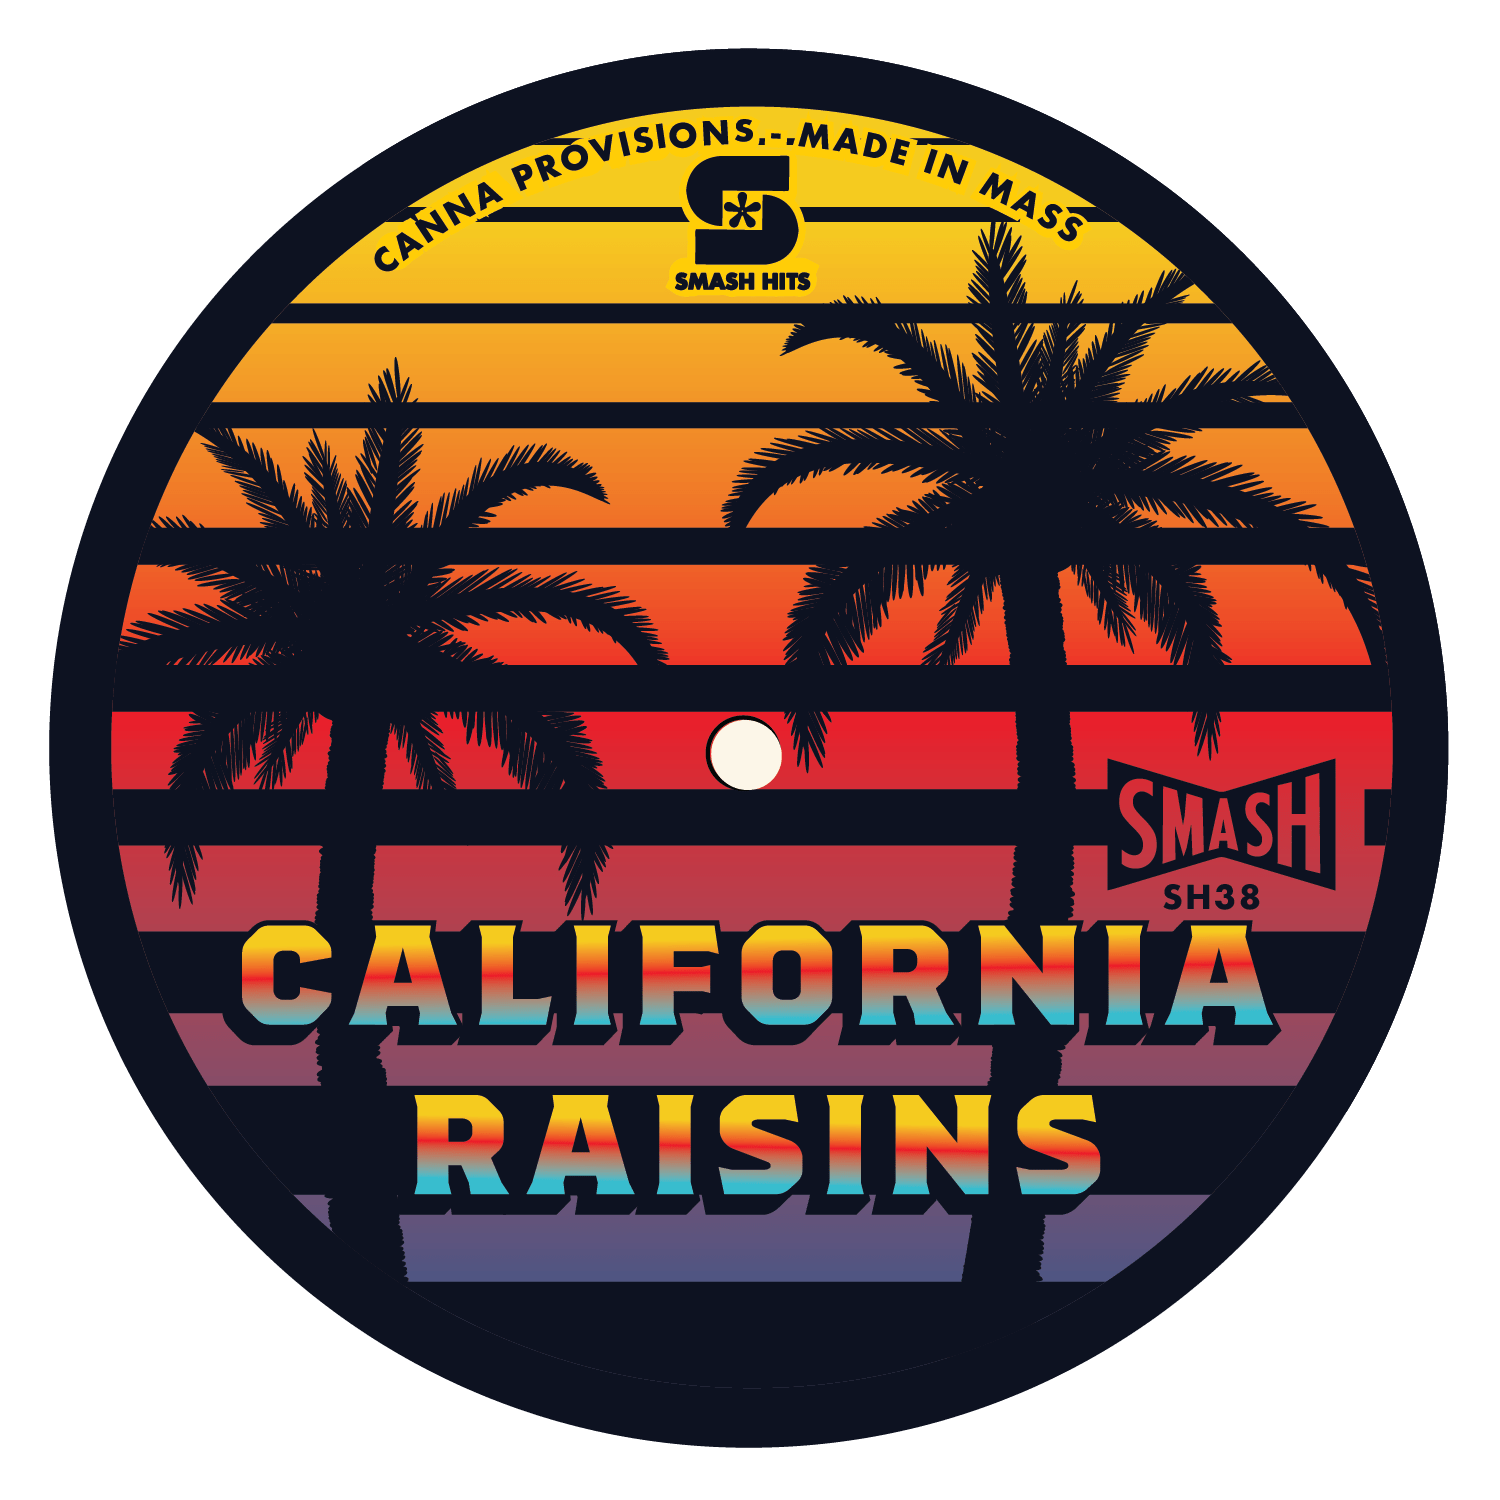 california raisins smash hits chemdog canna provisions